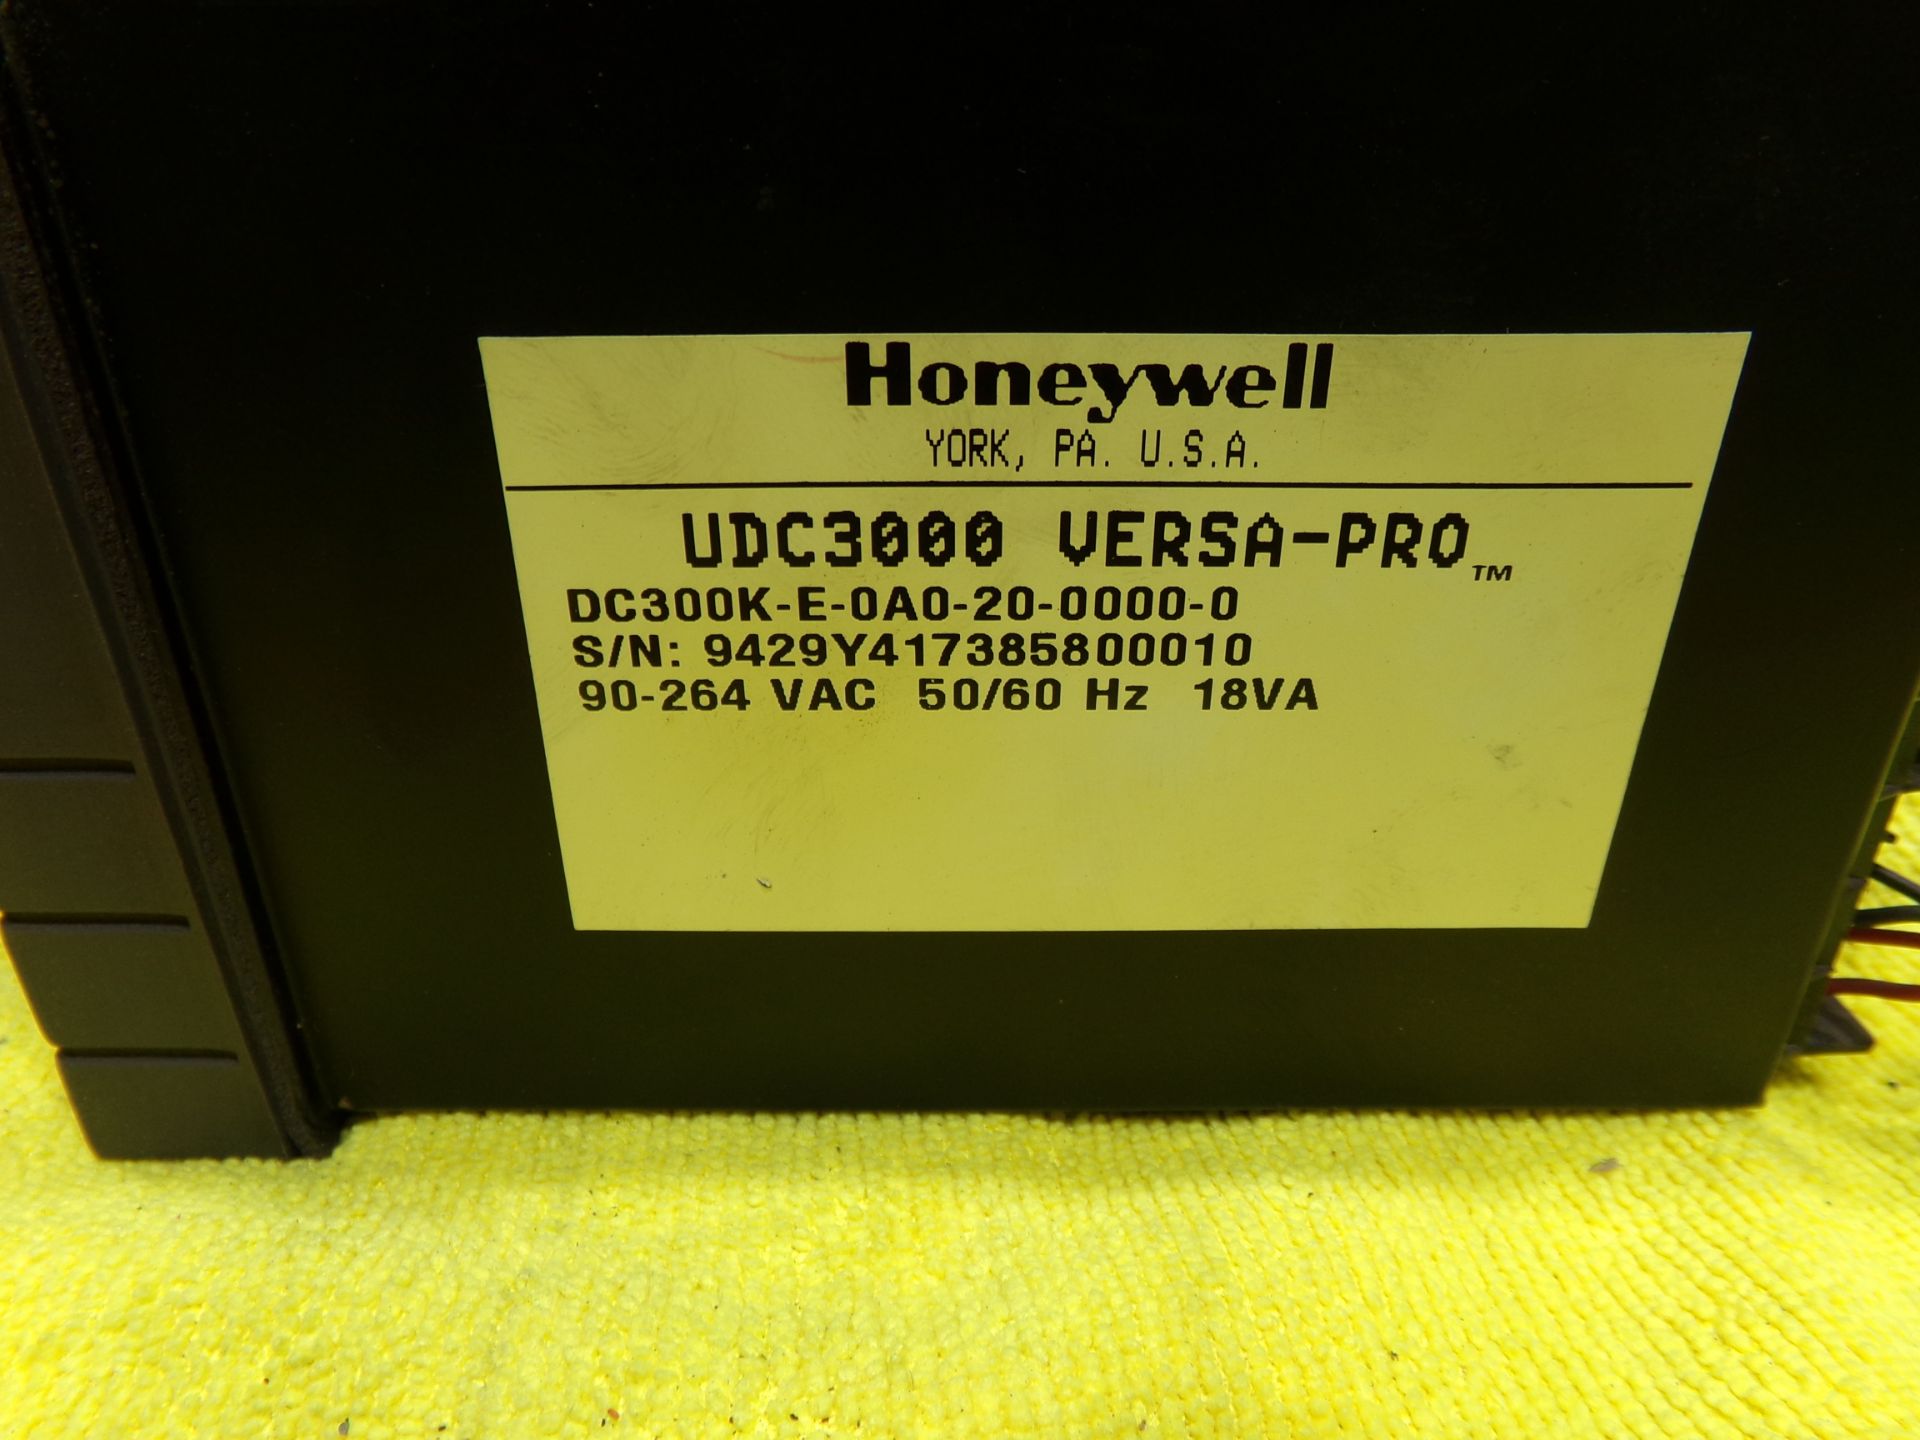 HONEYWELL DIGITAL CONTROLLER UDC3000 VERSA-PRO C300K-E-0A0-20-0000-0 90-264 VAC 50/60HZ 18VA LOT - Image 5 of 9